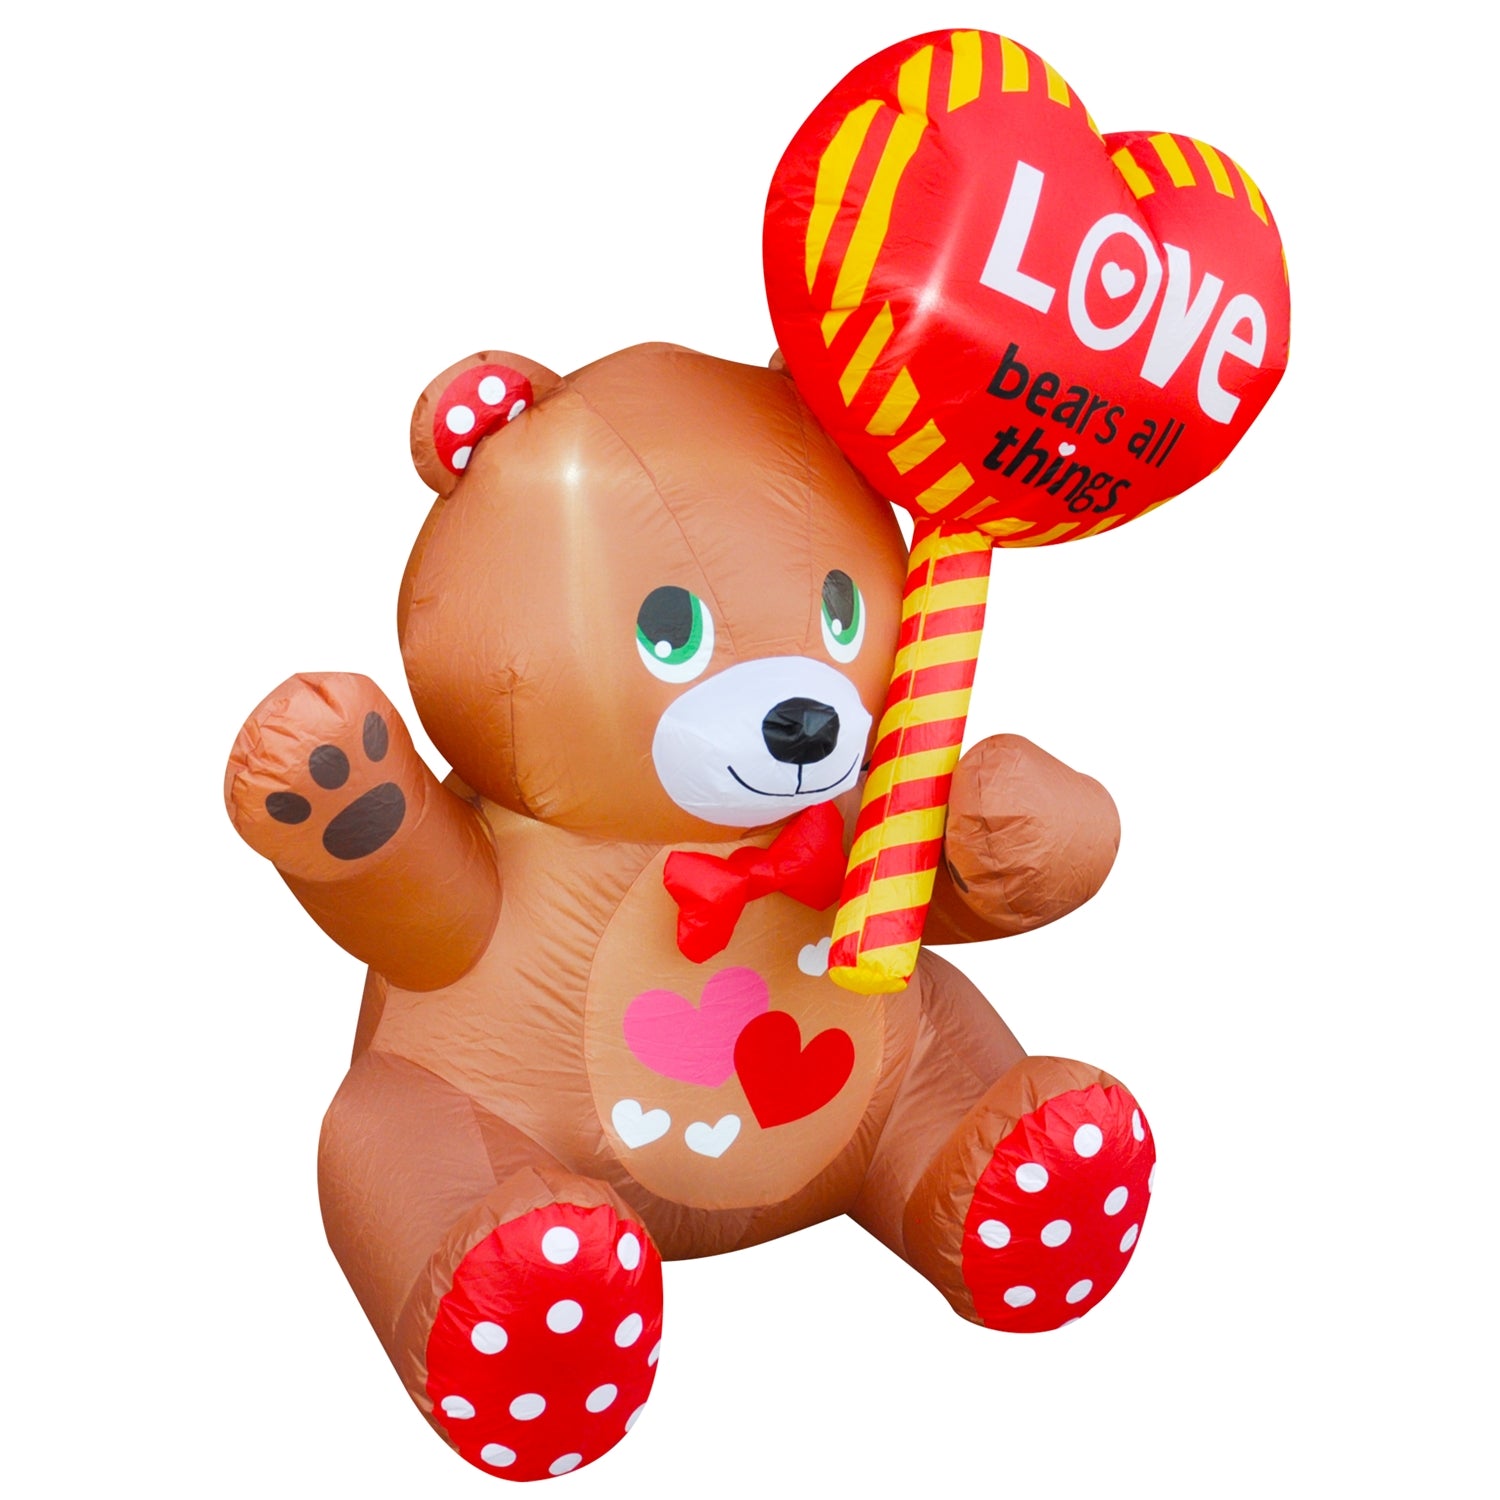 4Ft SeasonBlow Inflatable Valentine's Day Balloon Love Bear.